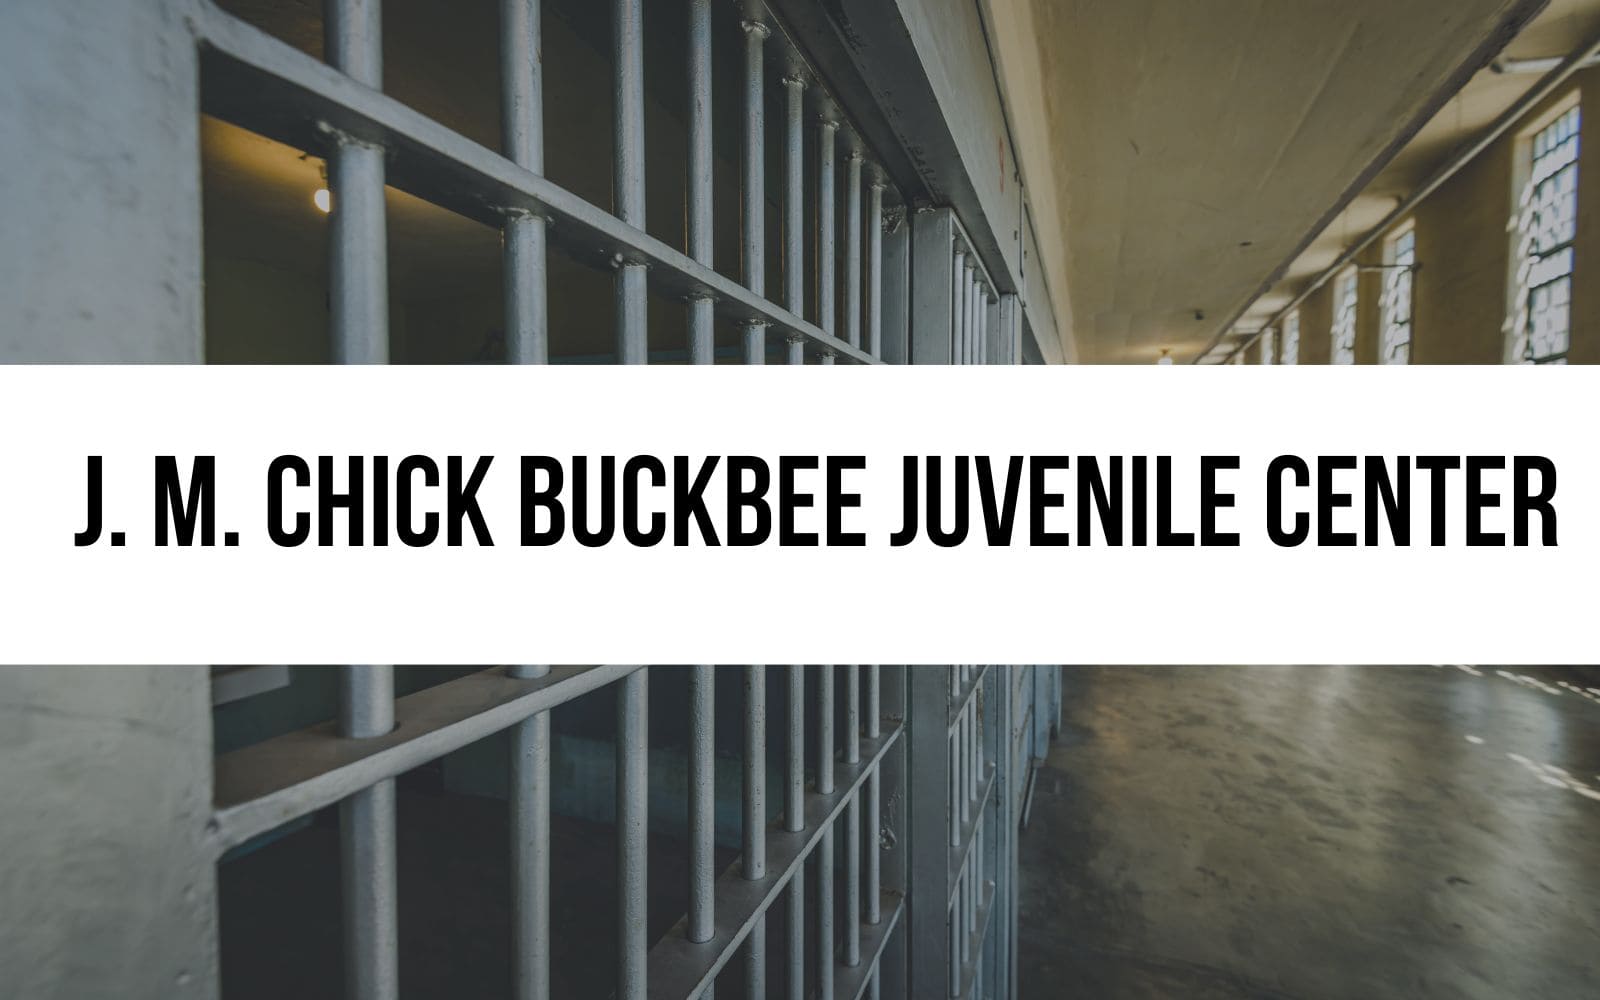 J. M. Chick Buckbee Juvenile Center